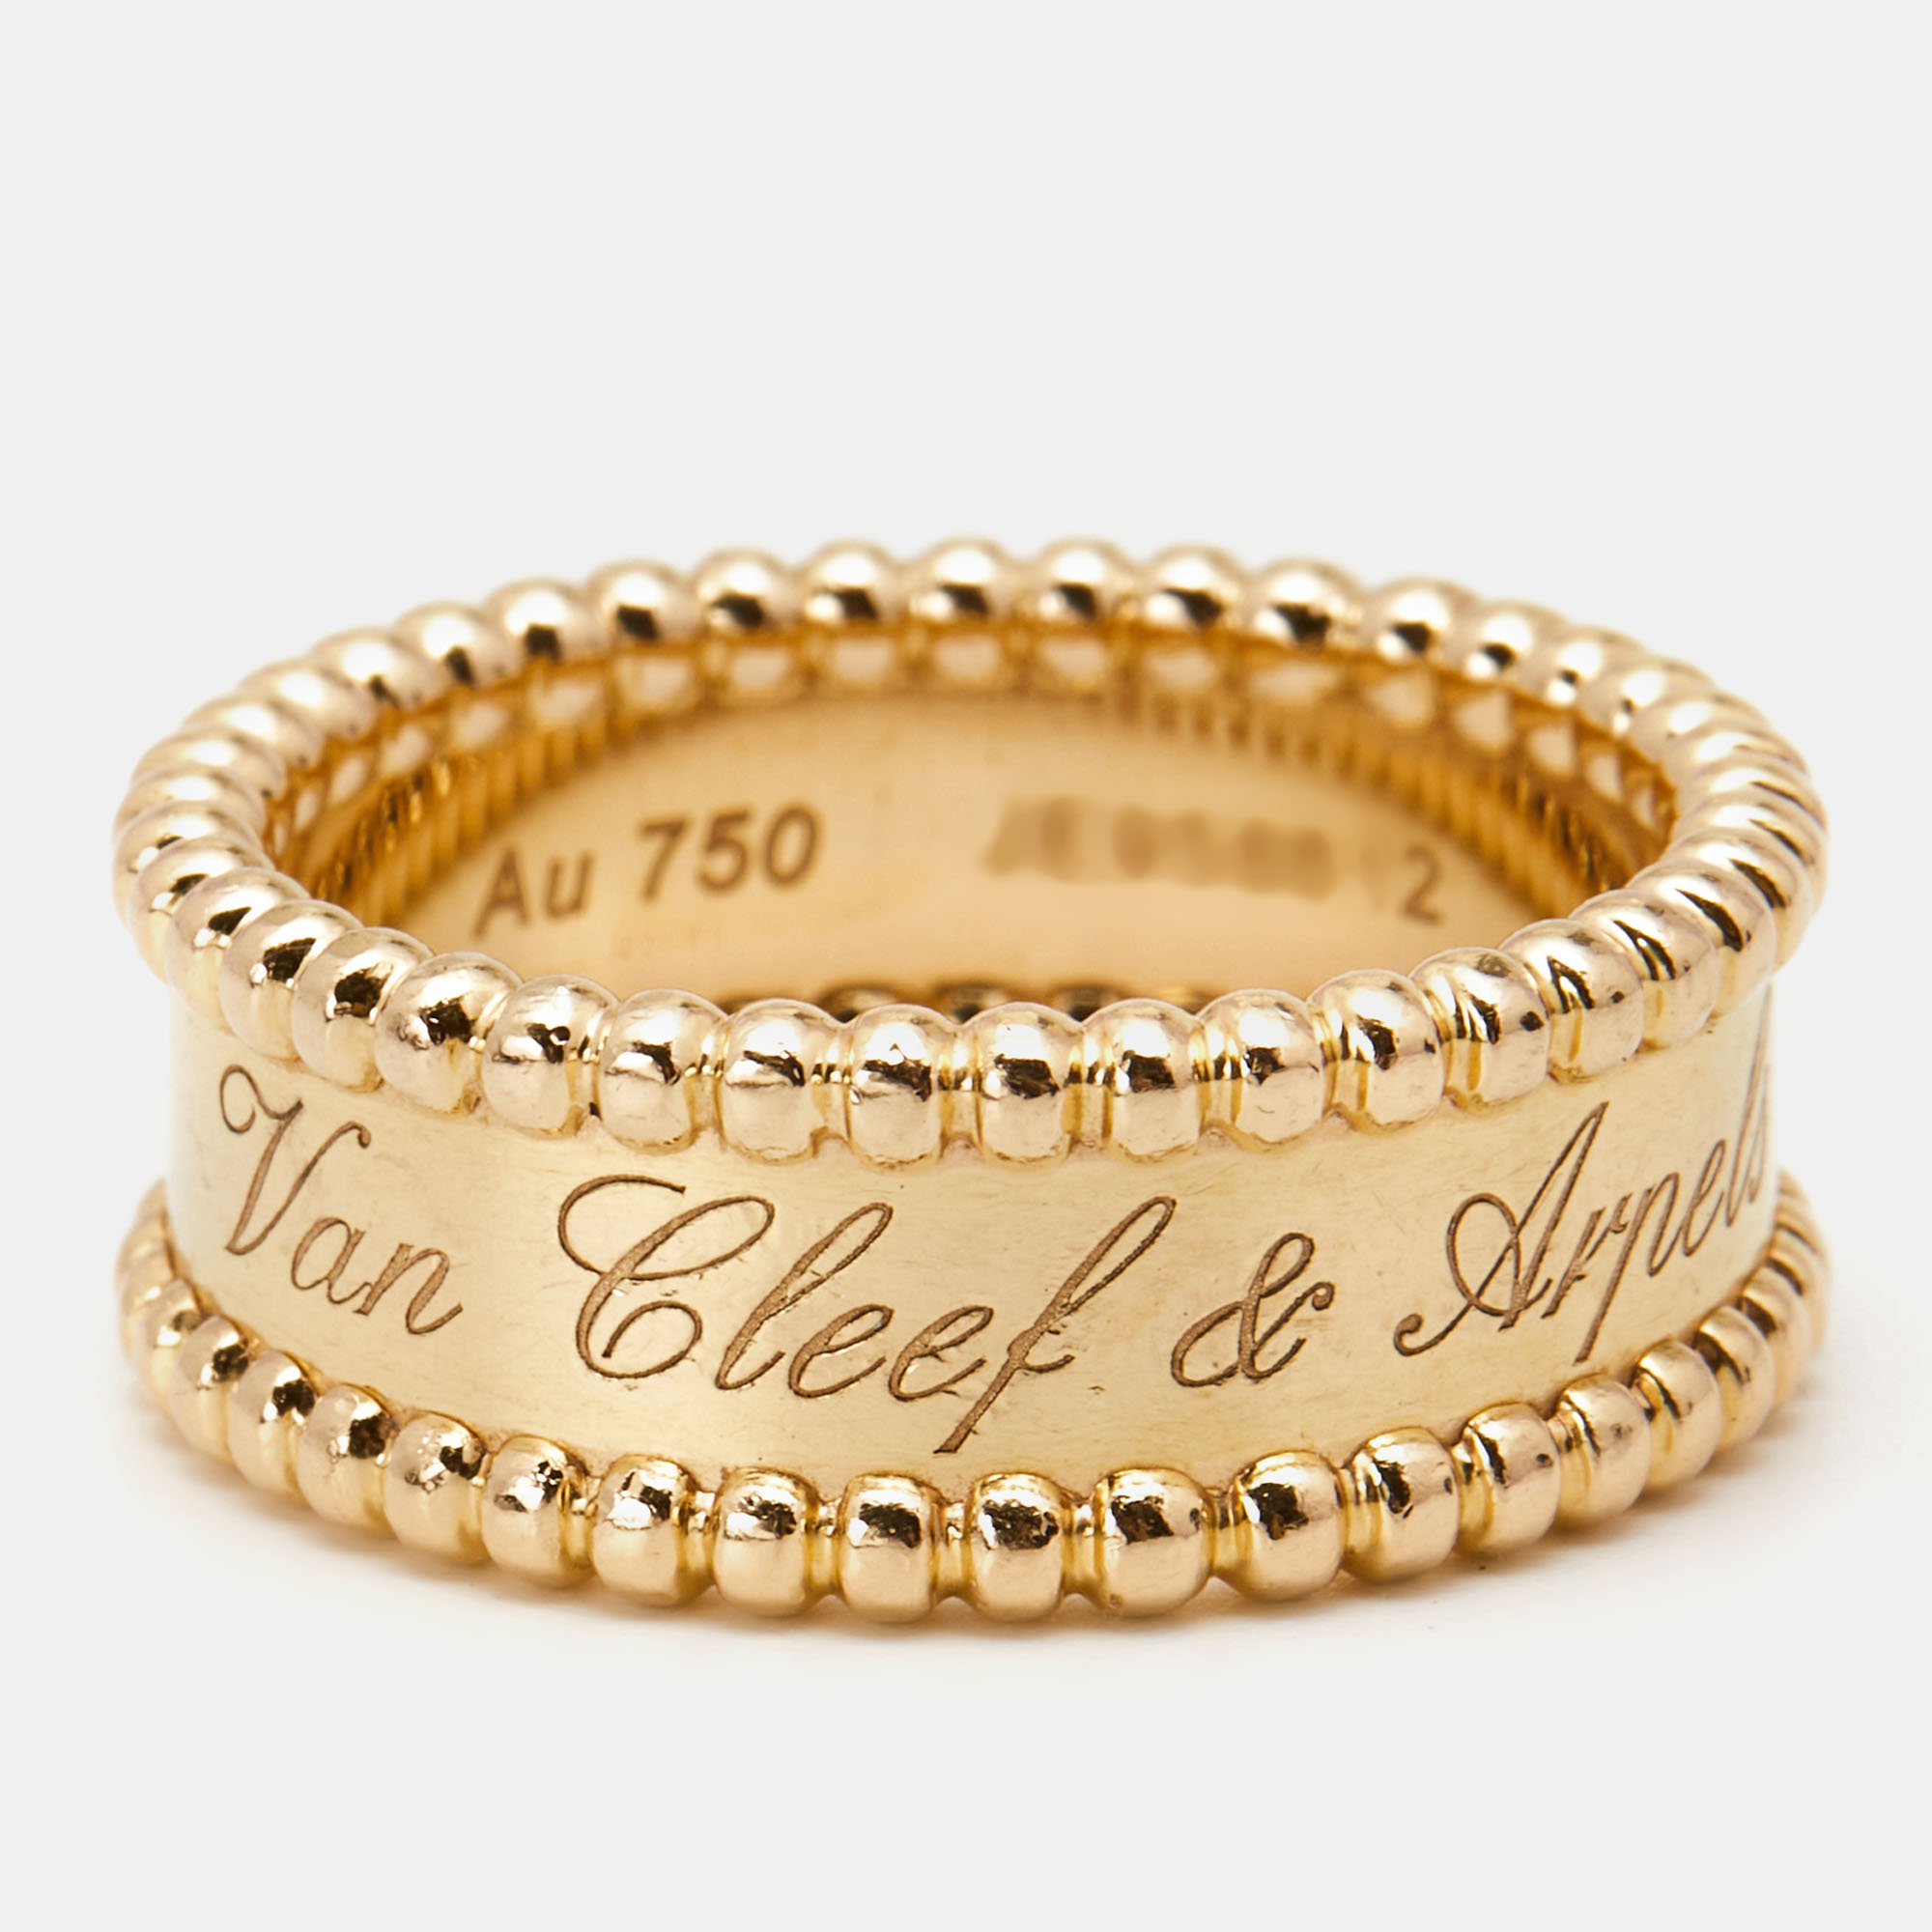 

Van Cleef & Arpels Perlée Signature 18k Rose Gold Ring Size